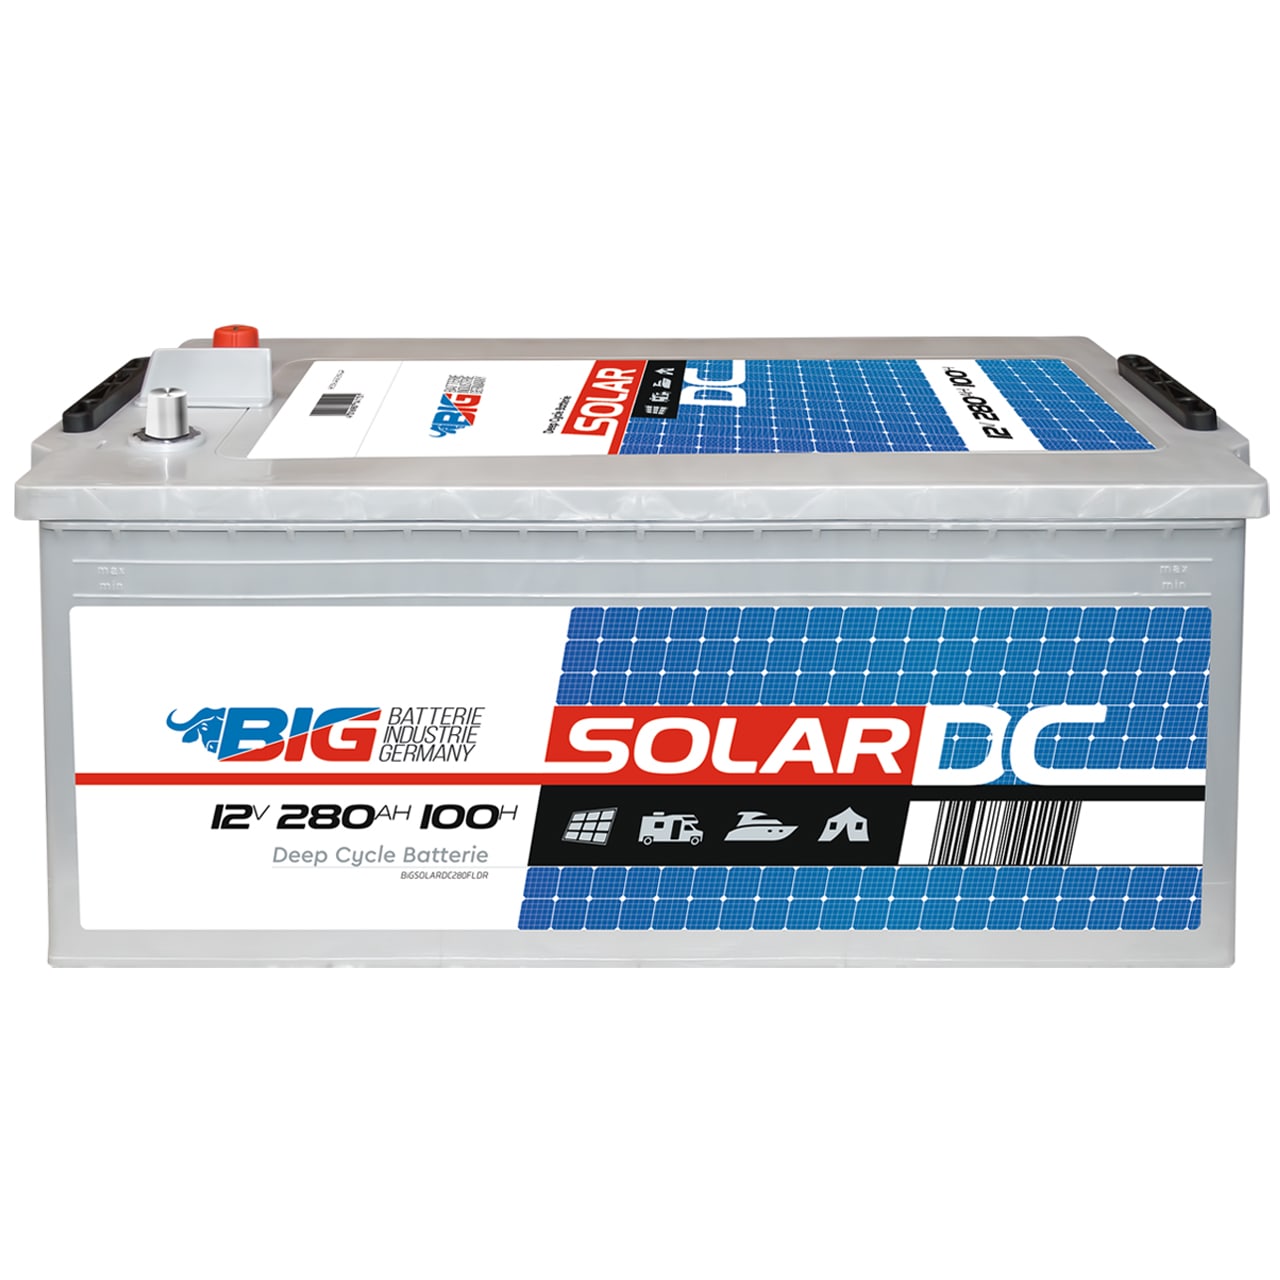 BSA Solar DC 12V 280Ah Batterie Solarbatterie Versorgungsbatterie Boot  Wohnmobil - 6 Grössen: : Auto & Motorrad